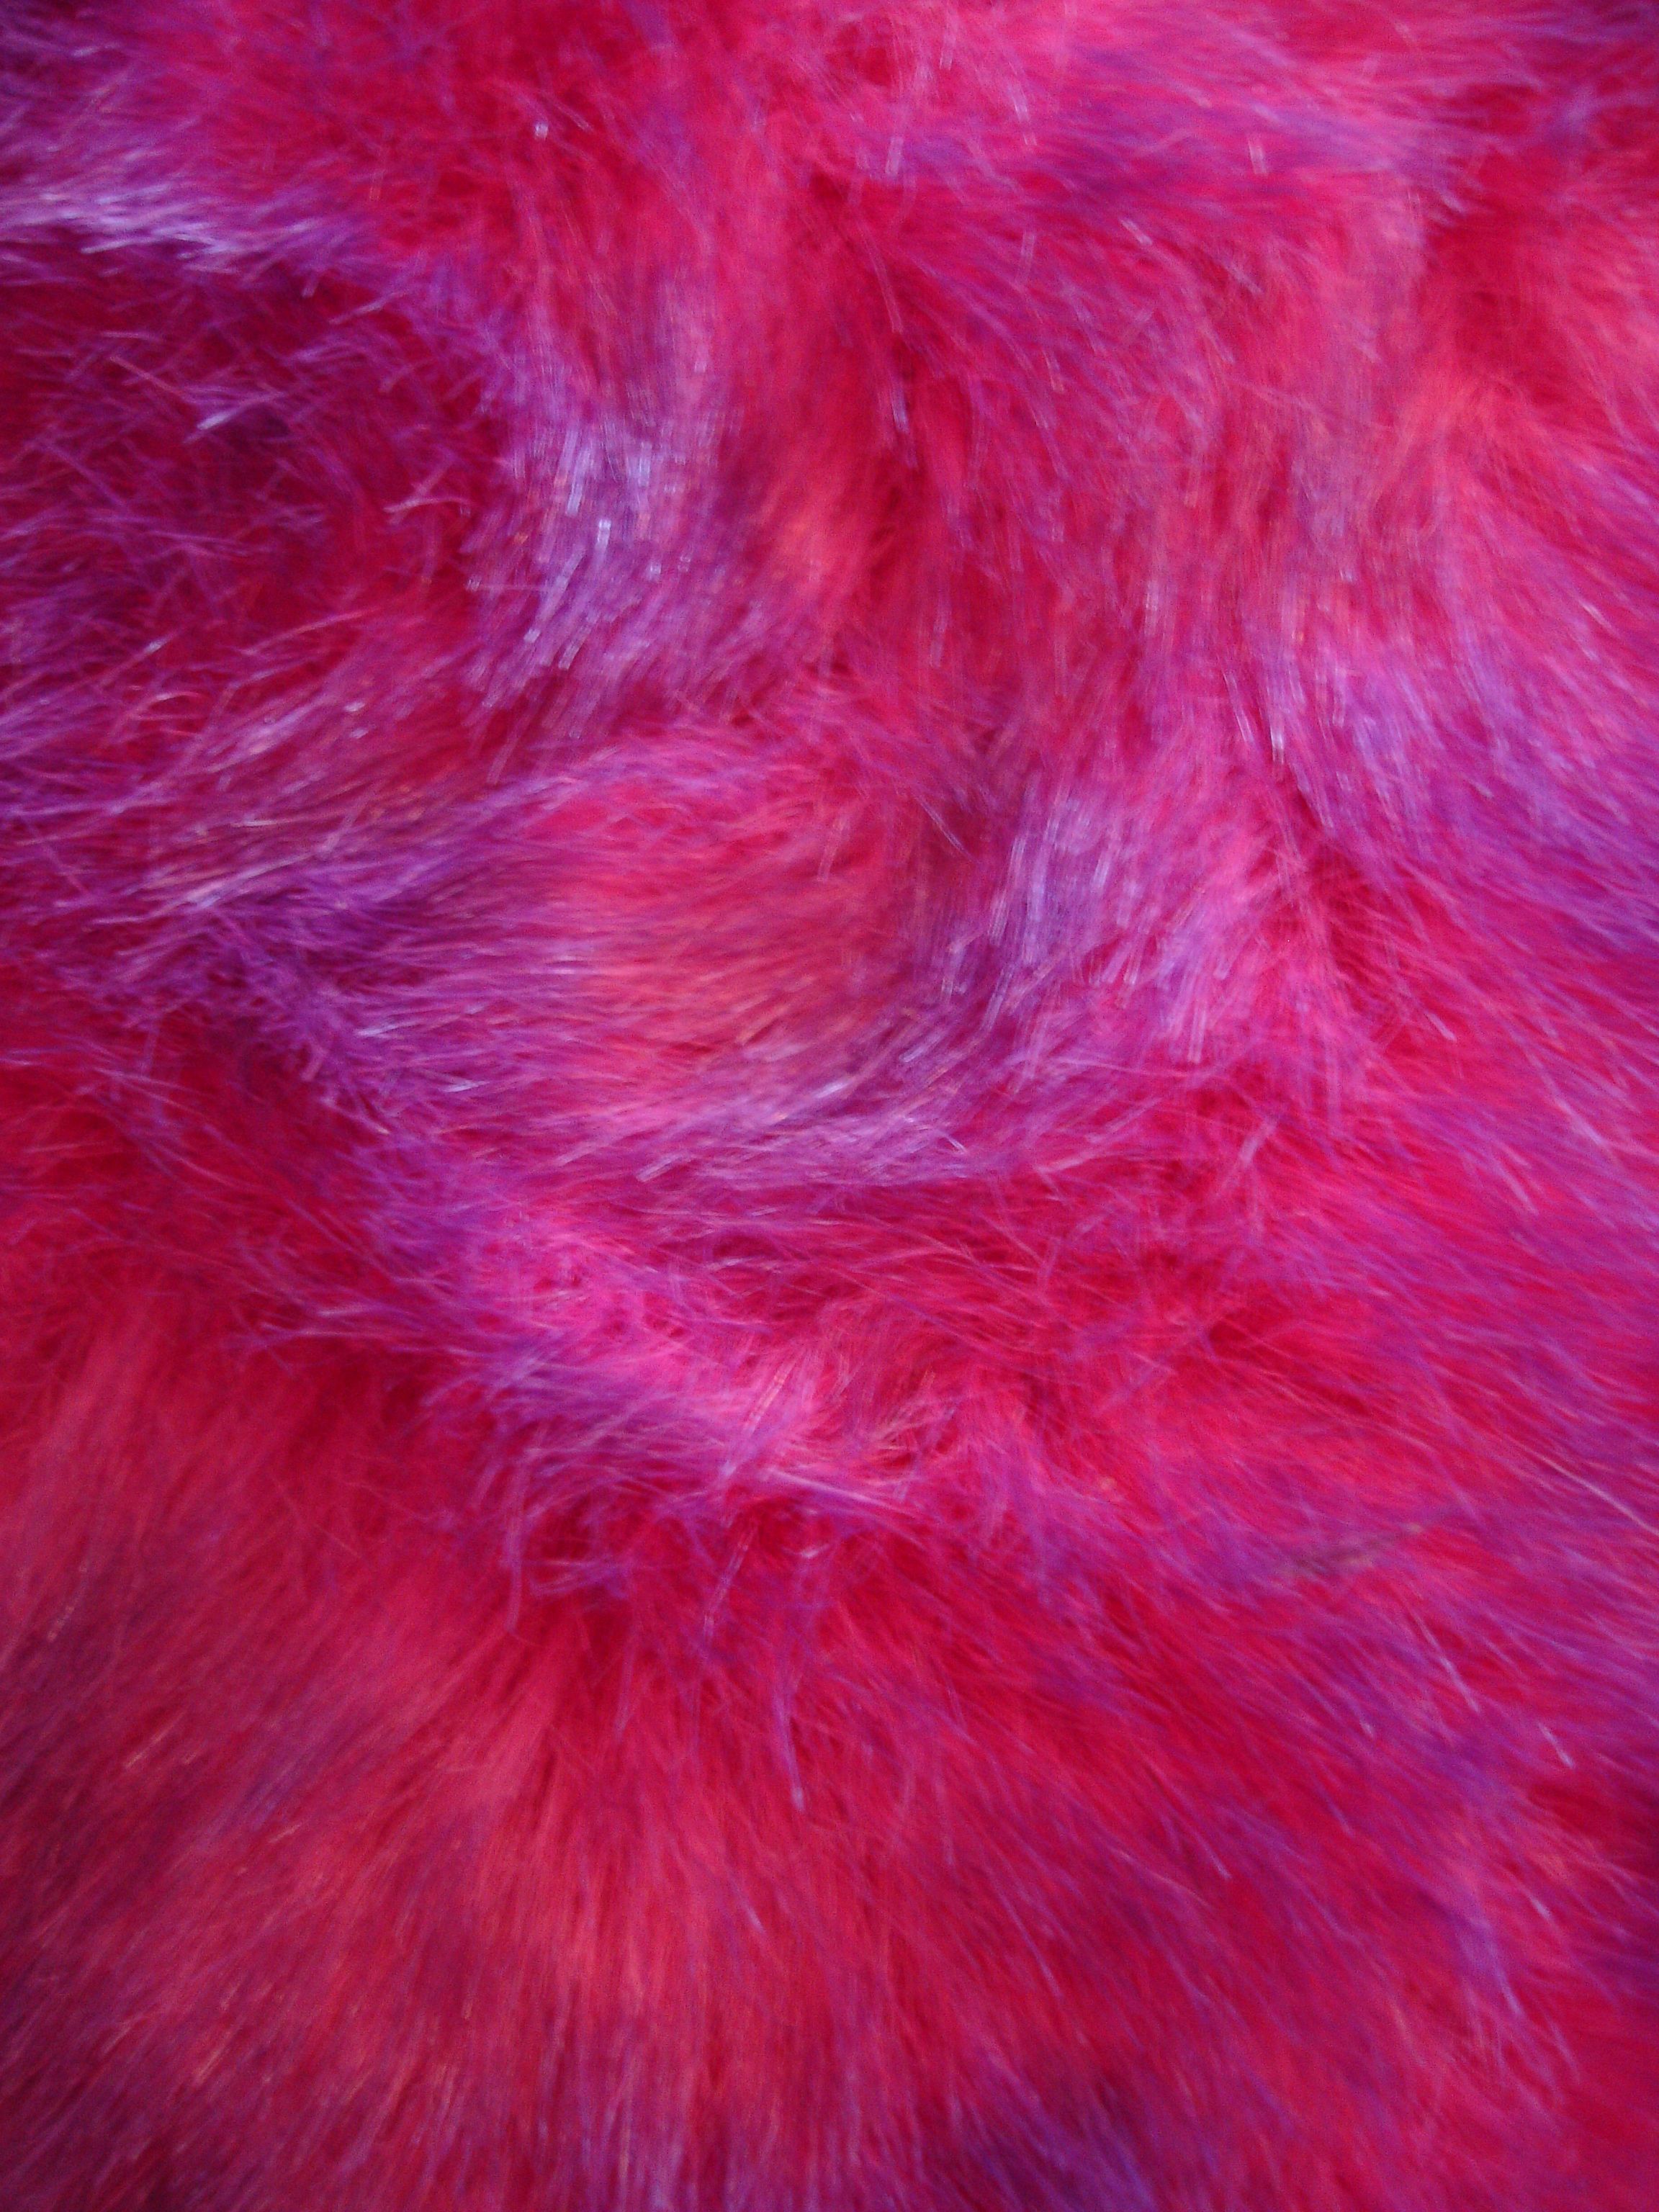 2304x3072 Pink Fur Wallpaper Wizards Of Waverly Place Hd Wallpaper